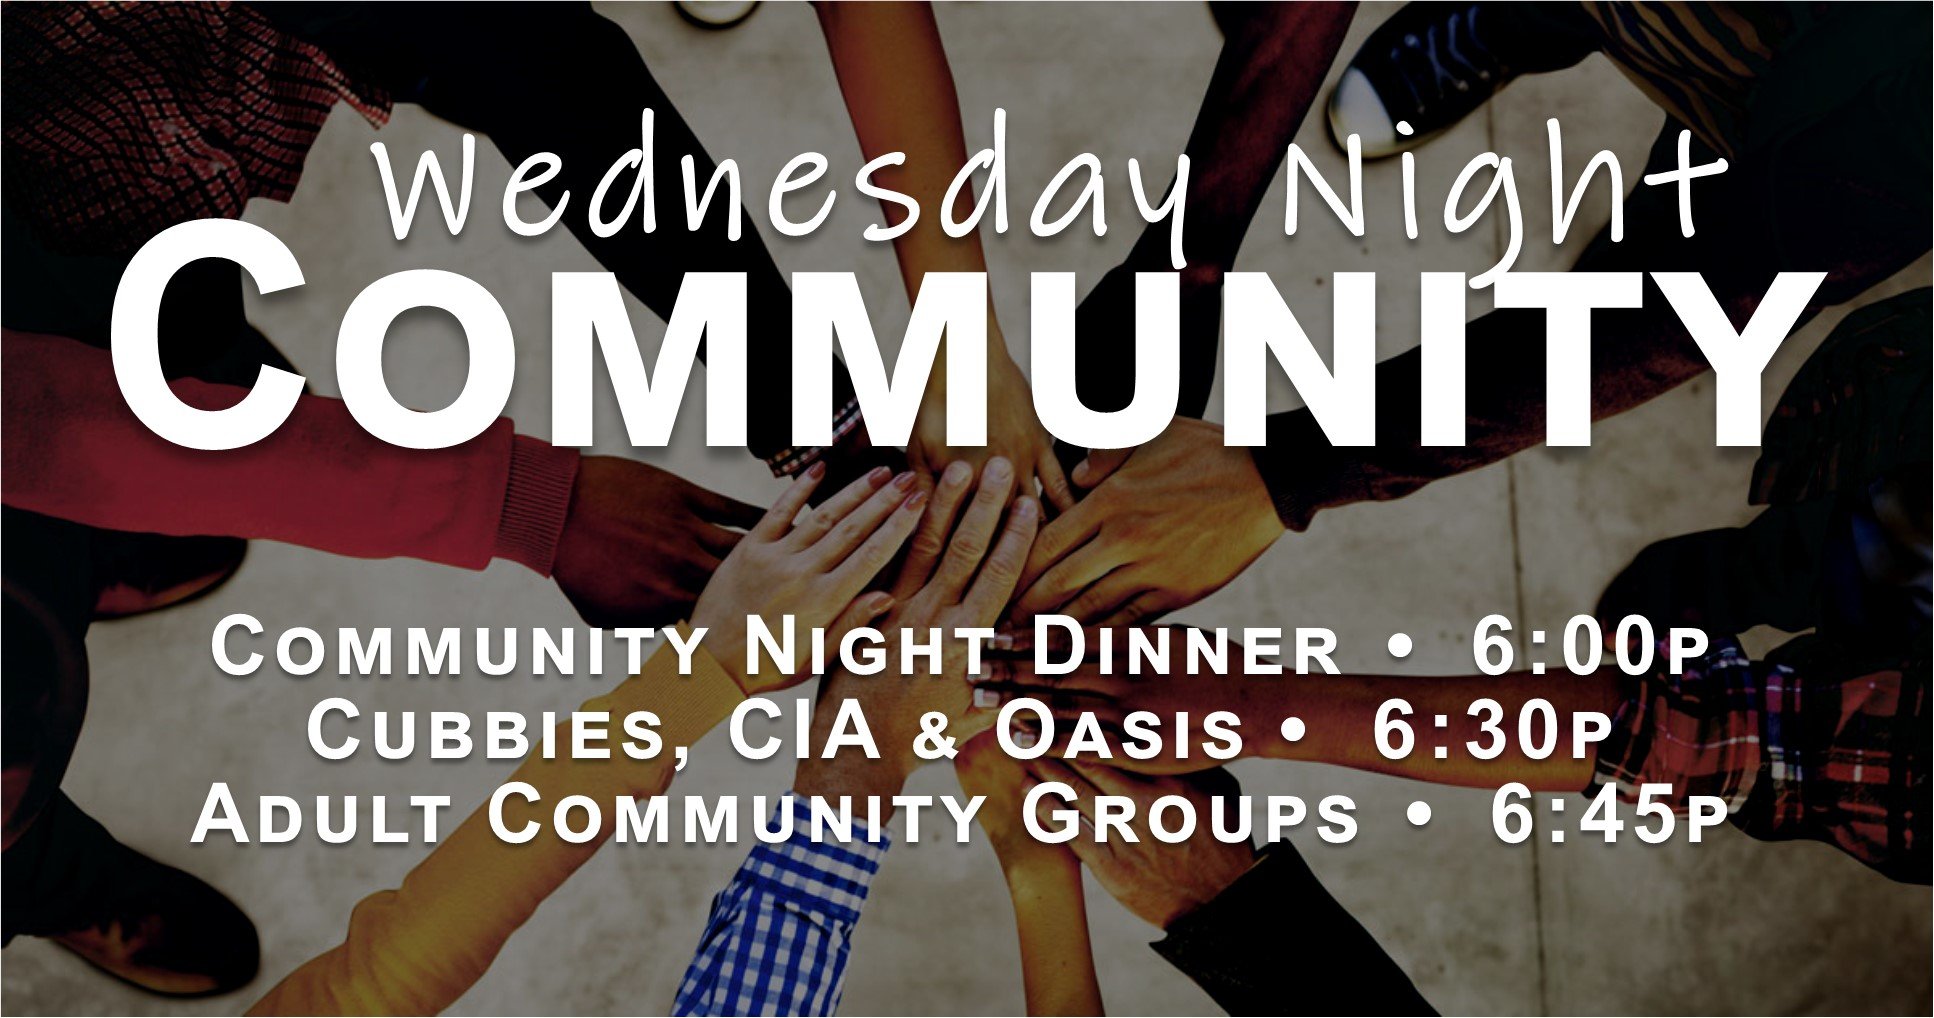 Wednesday Night Community.jpg